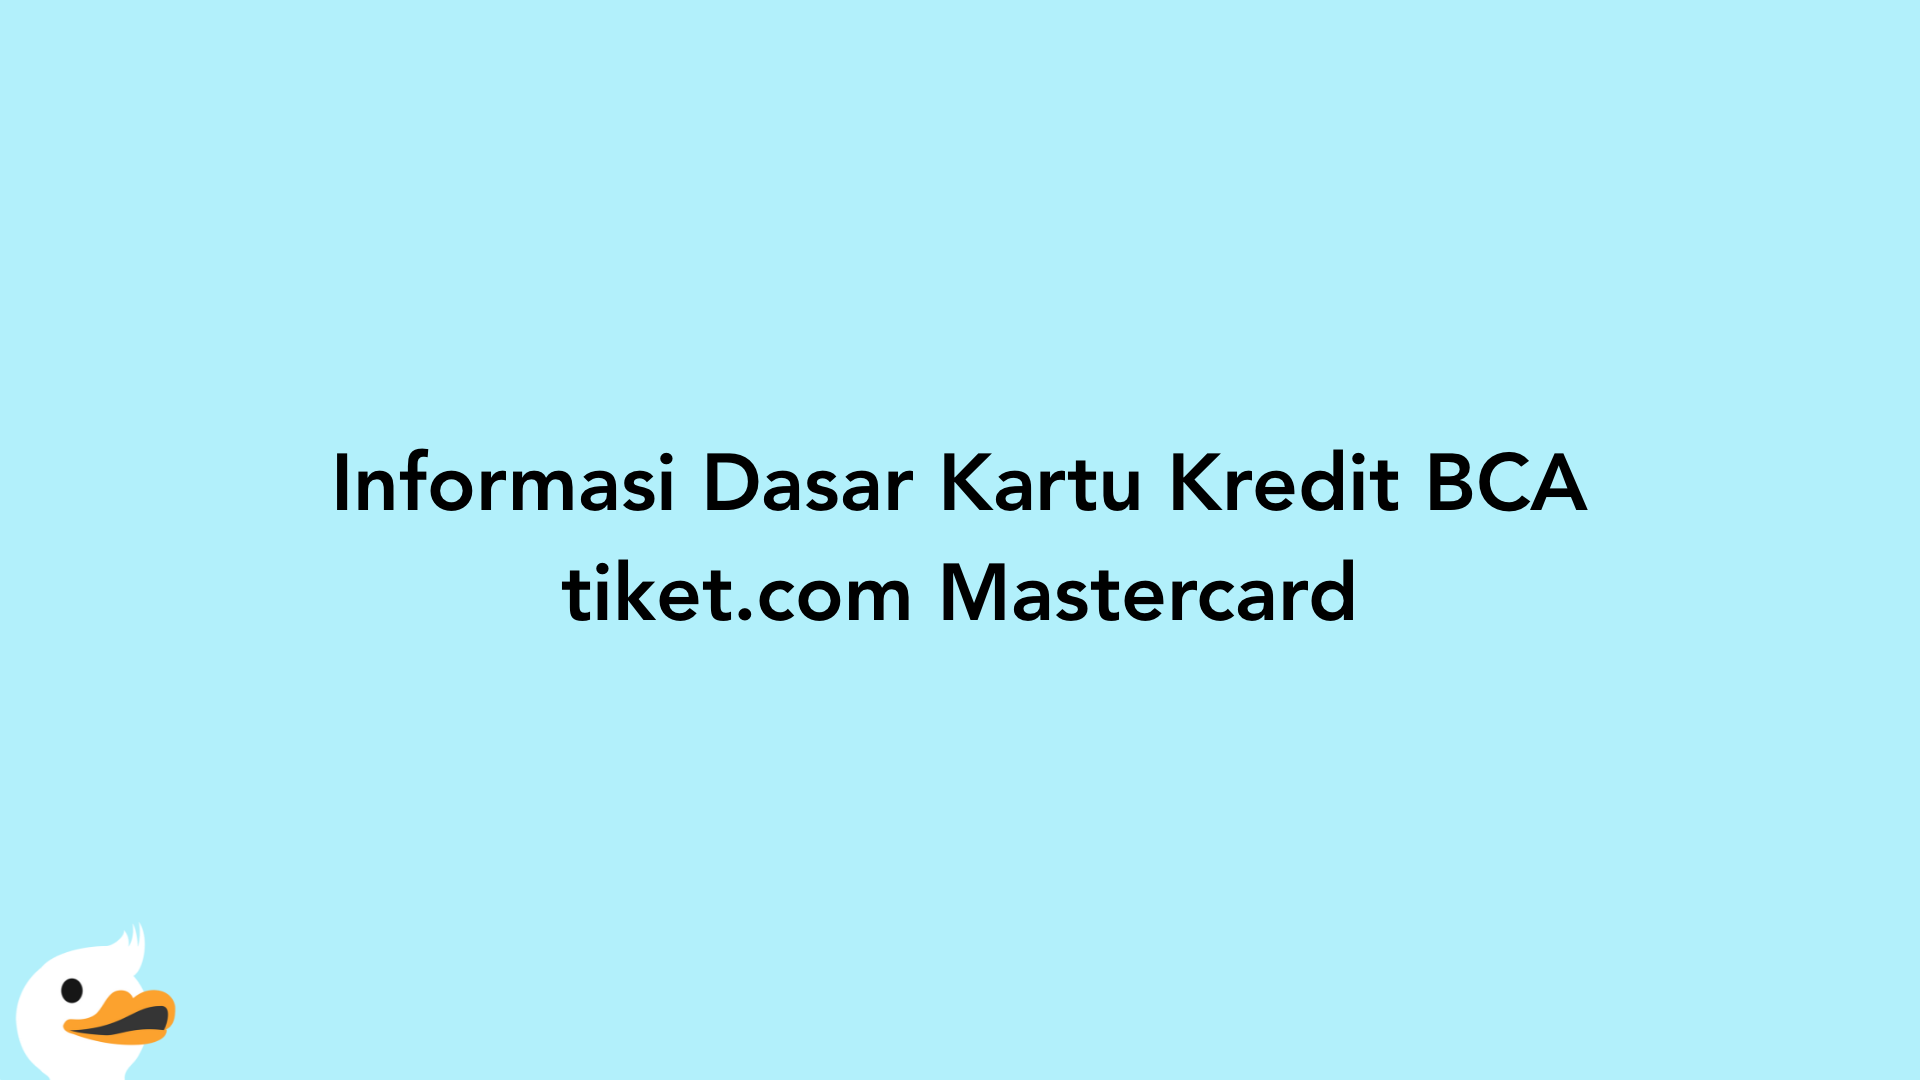 Informasi Dasar Kartu Kredit BCA tiket.com Mastercard